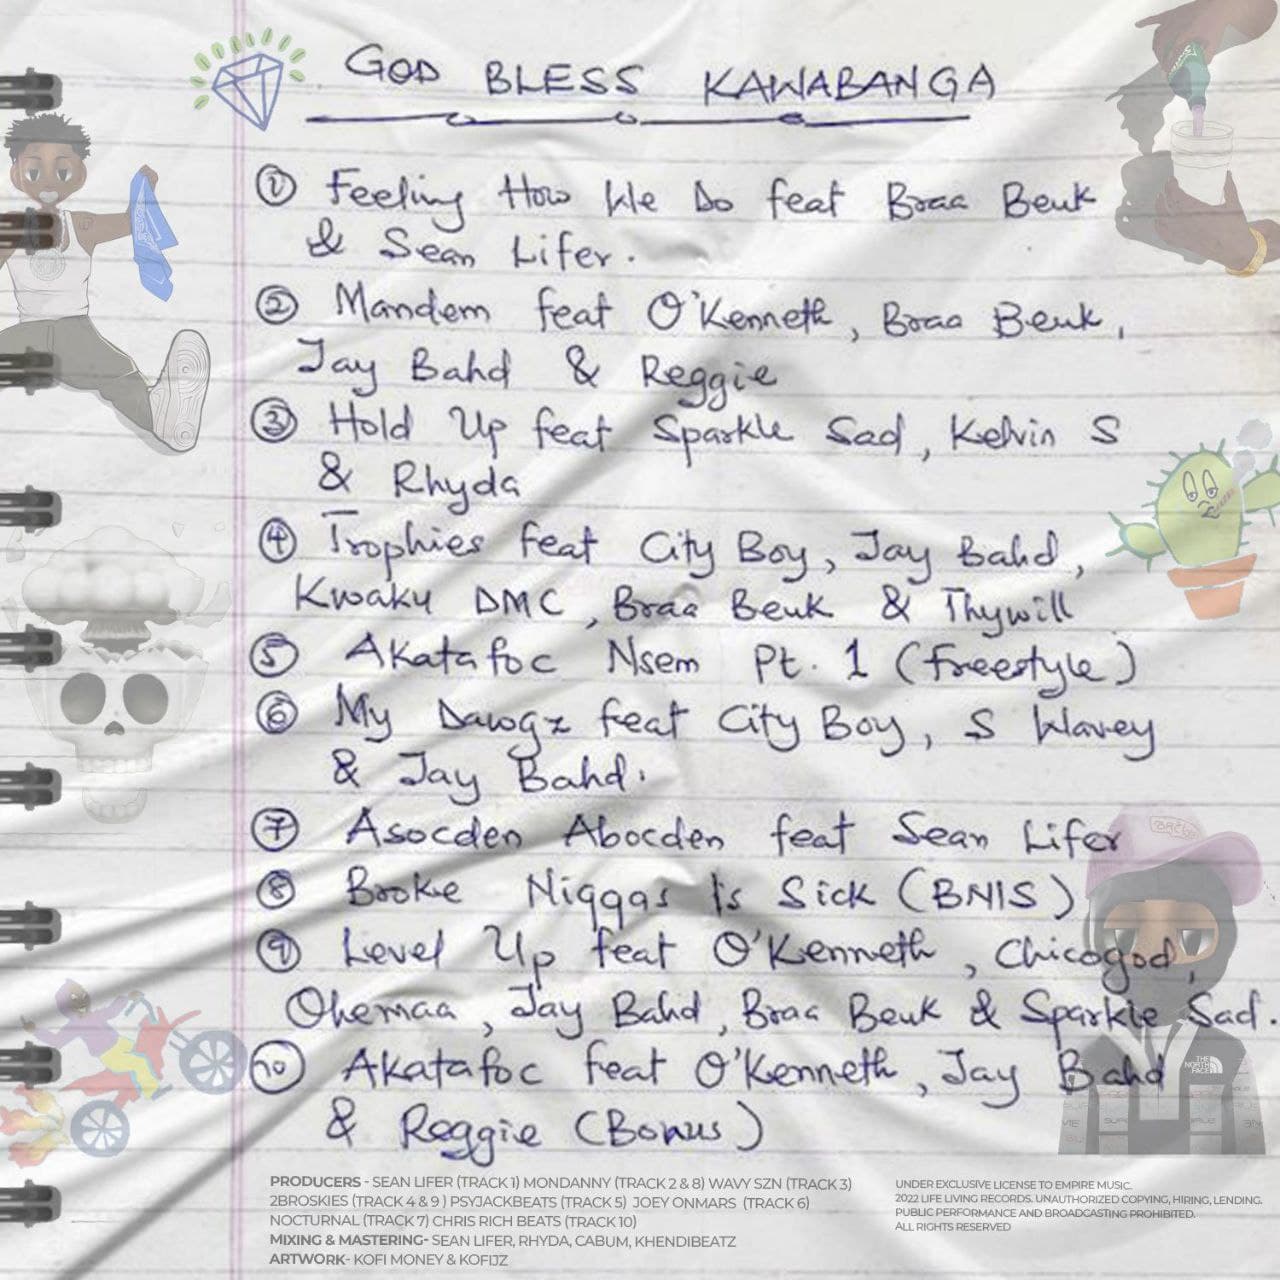 Kawabanga - God Bless Kawabanga EP (Full Album)